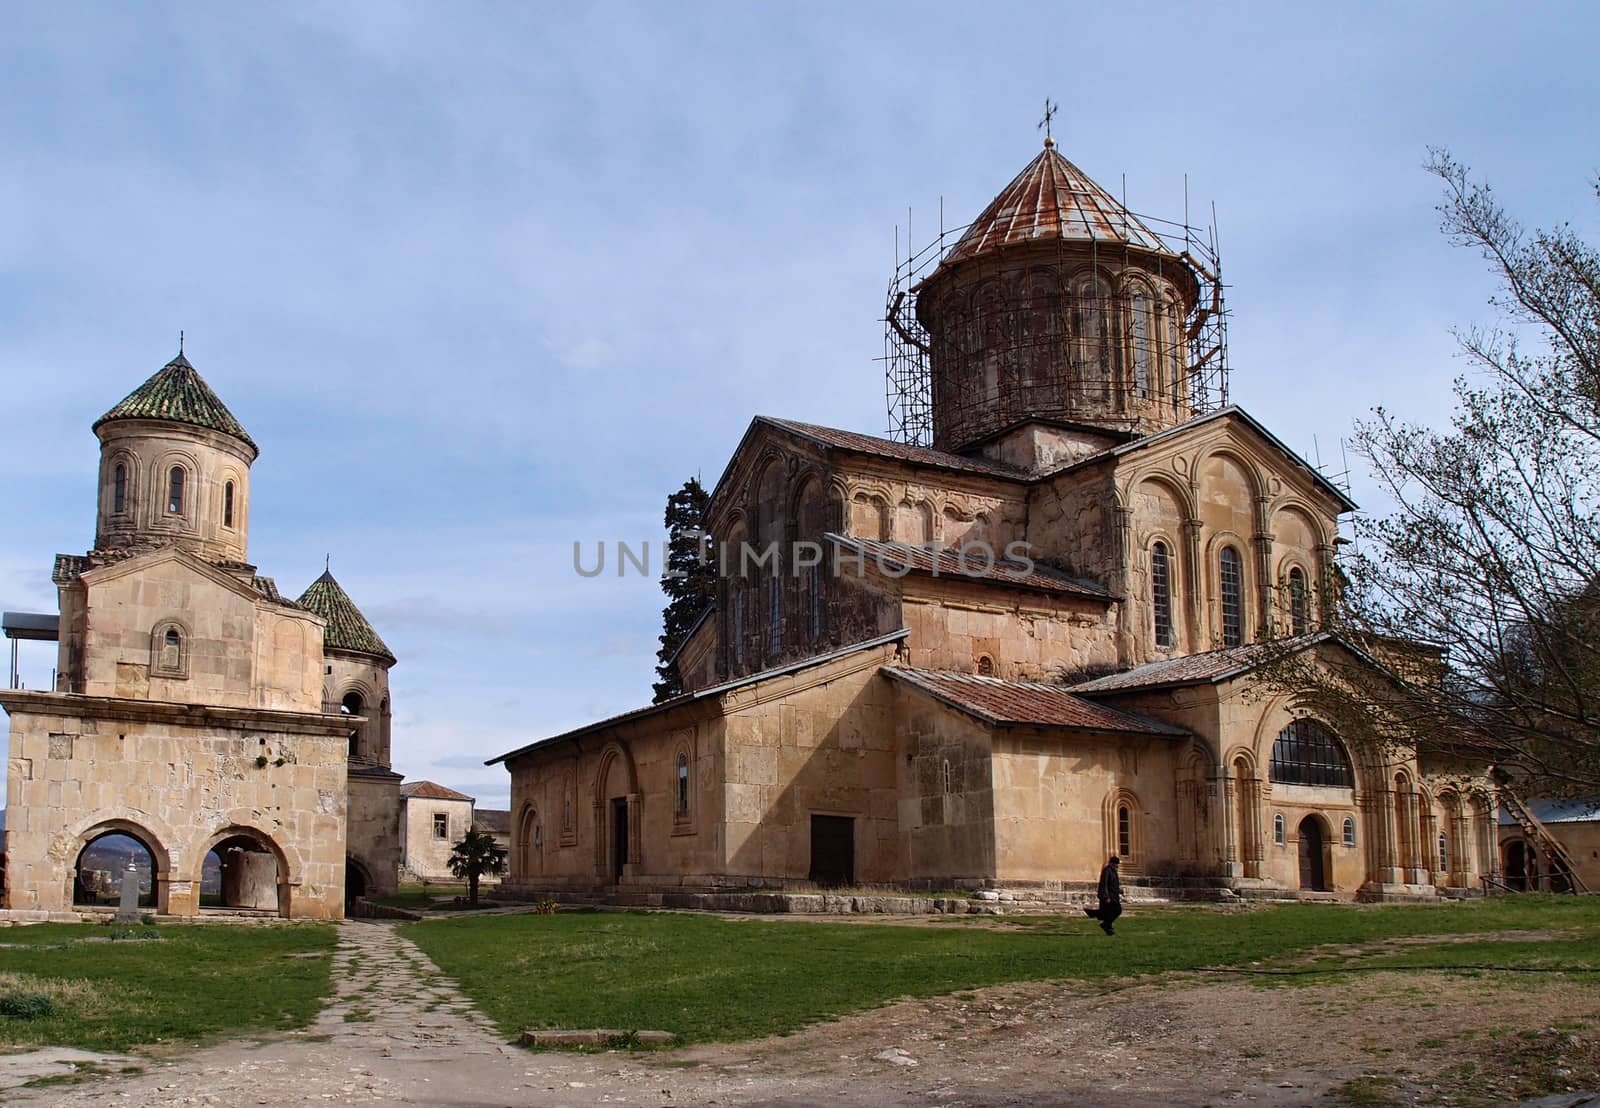 The church near Tbilisi, Georgia          by jnerad